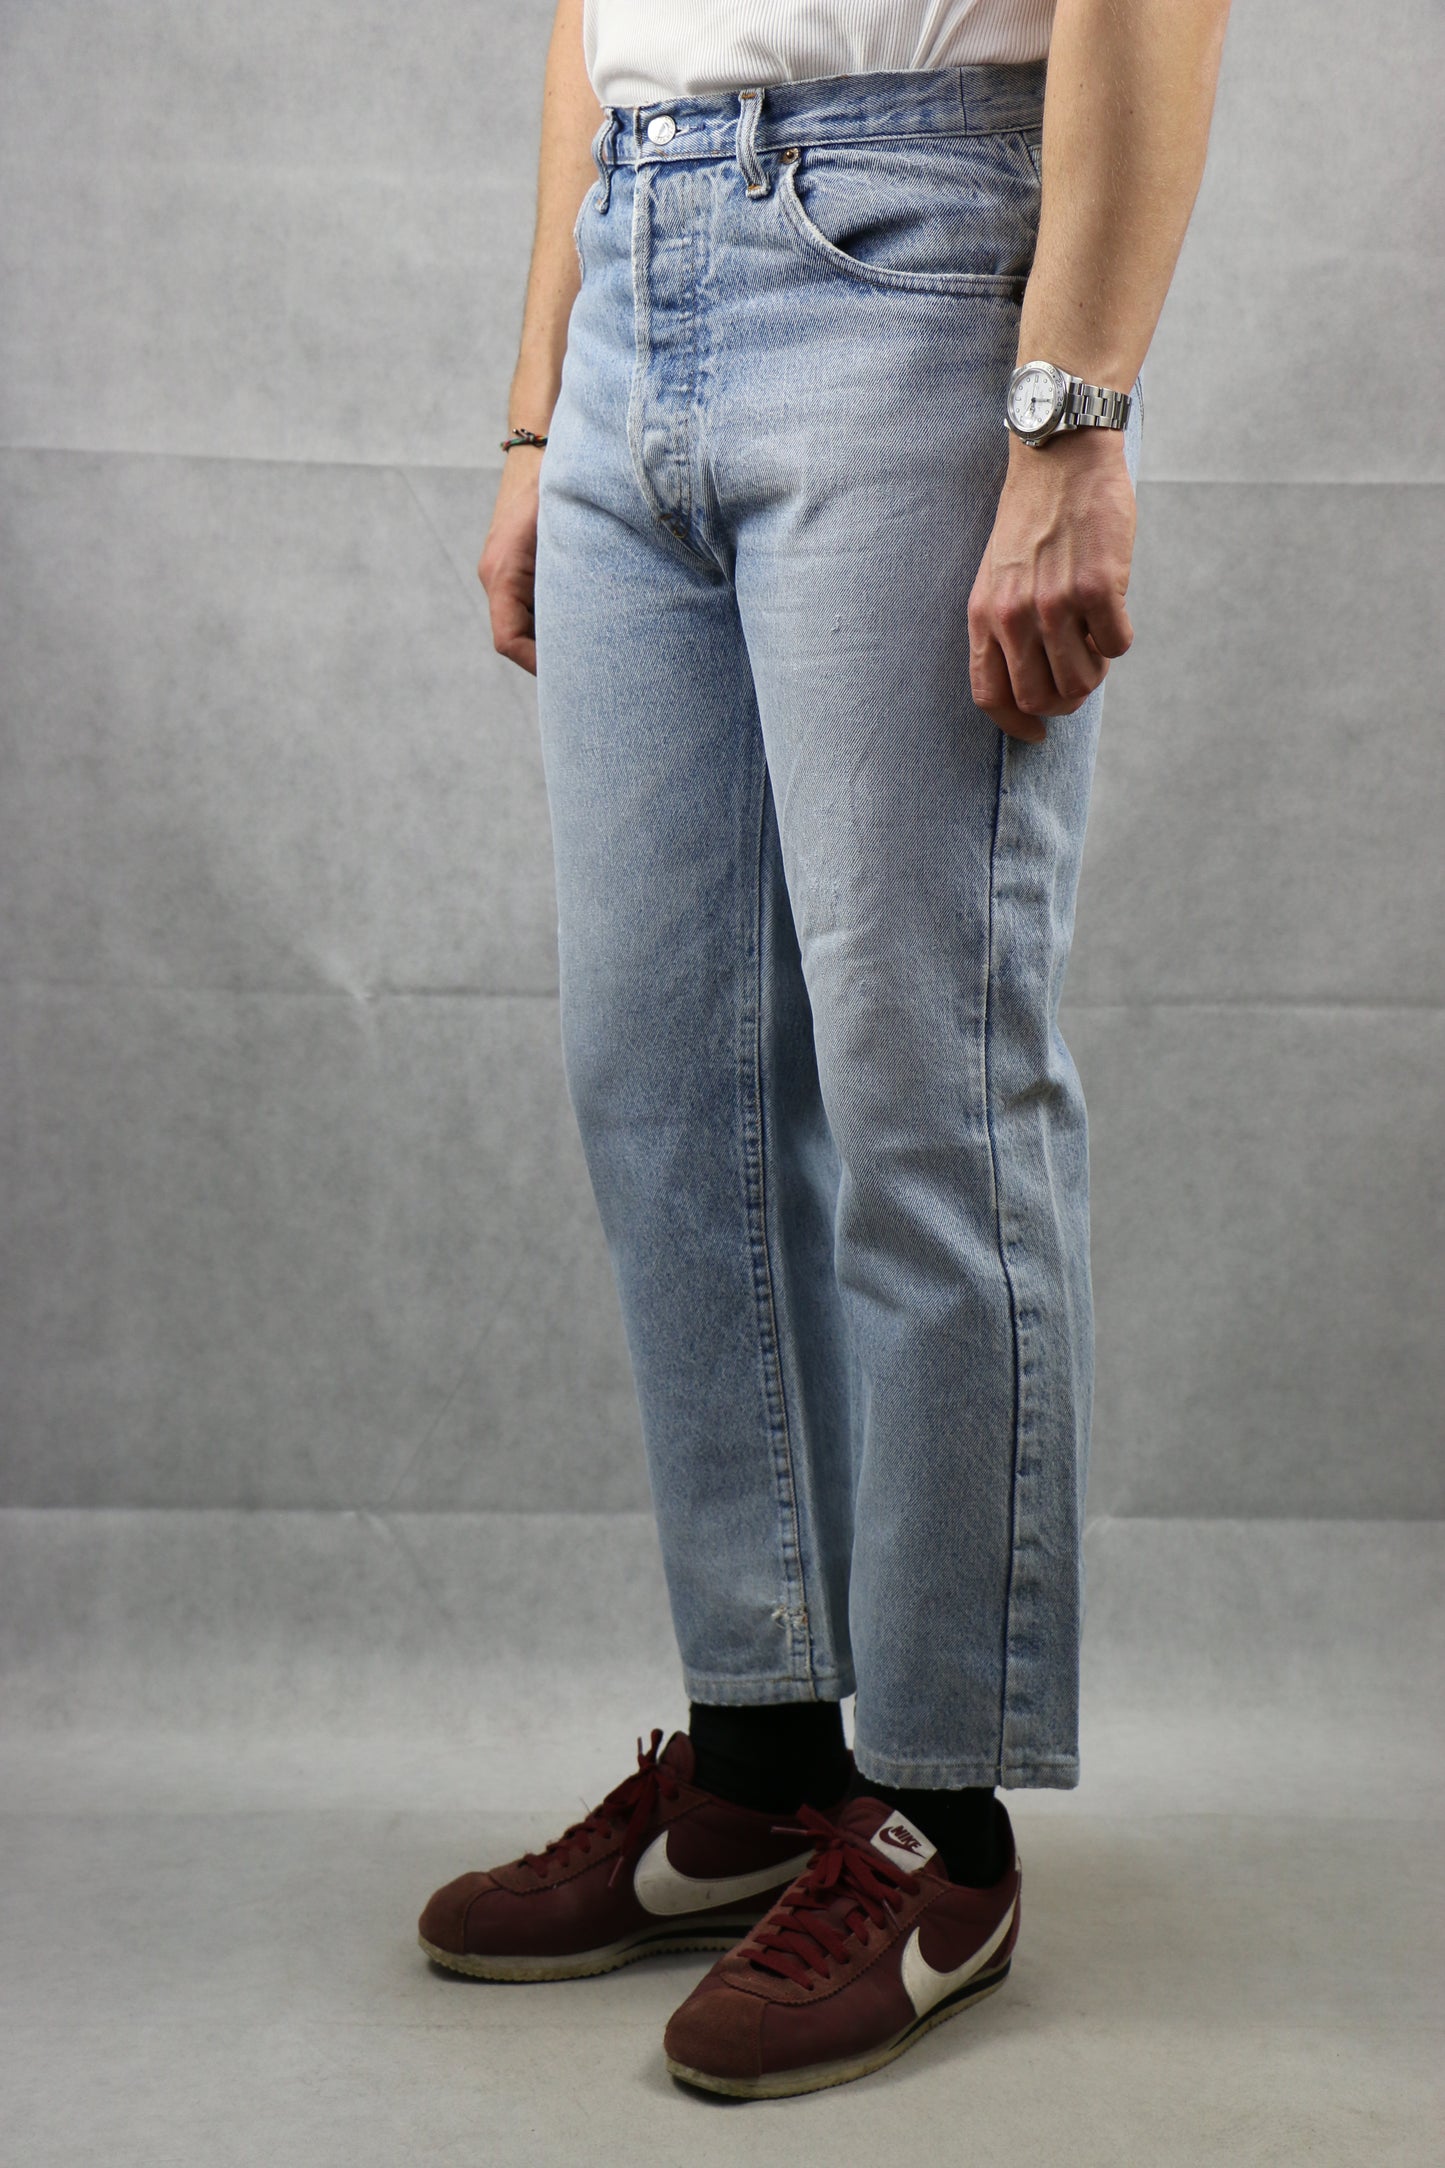 Levi's 501 Jeans with buttoned up back pocket, clochard92.com